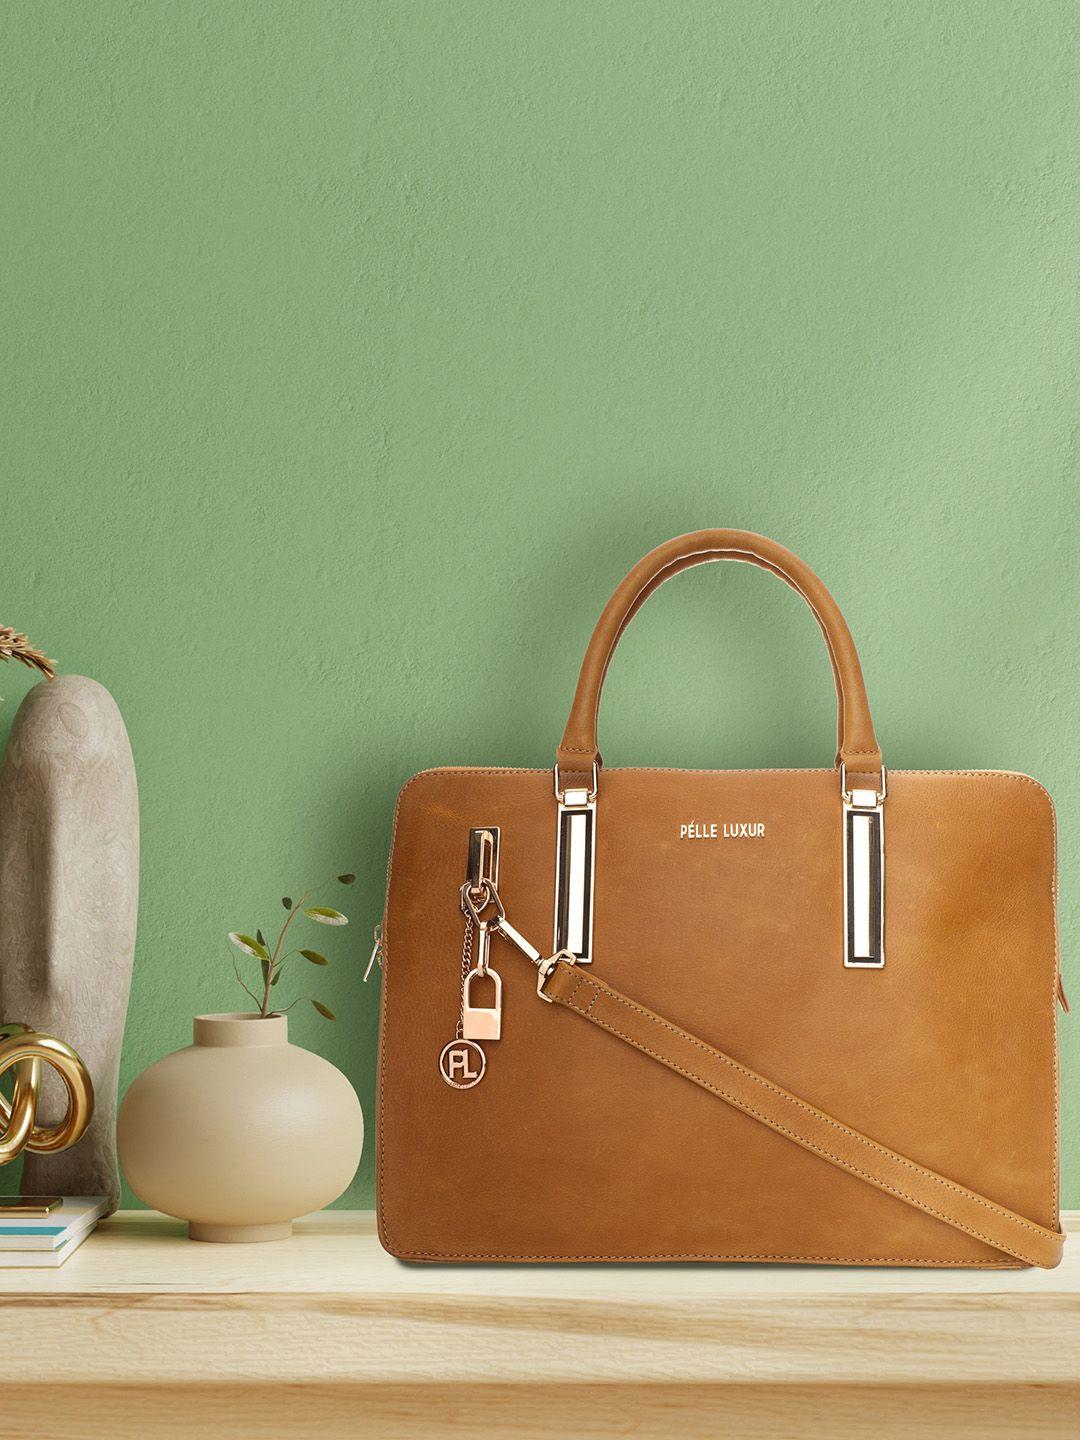 pelle luxur women tan leather oversized structured handheld bag